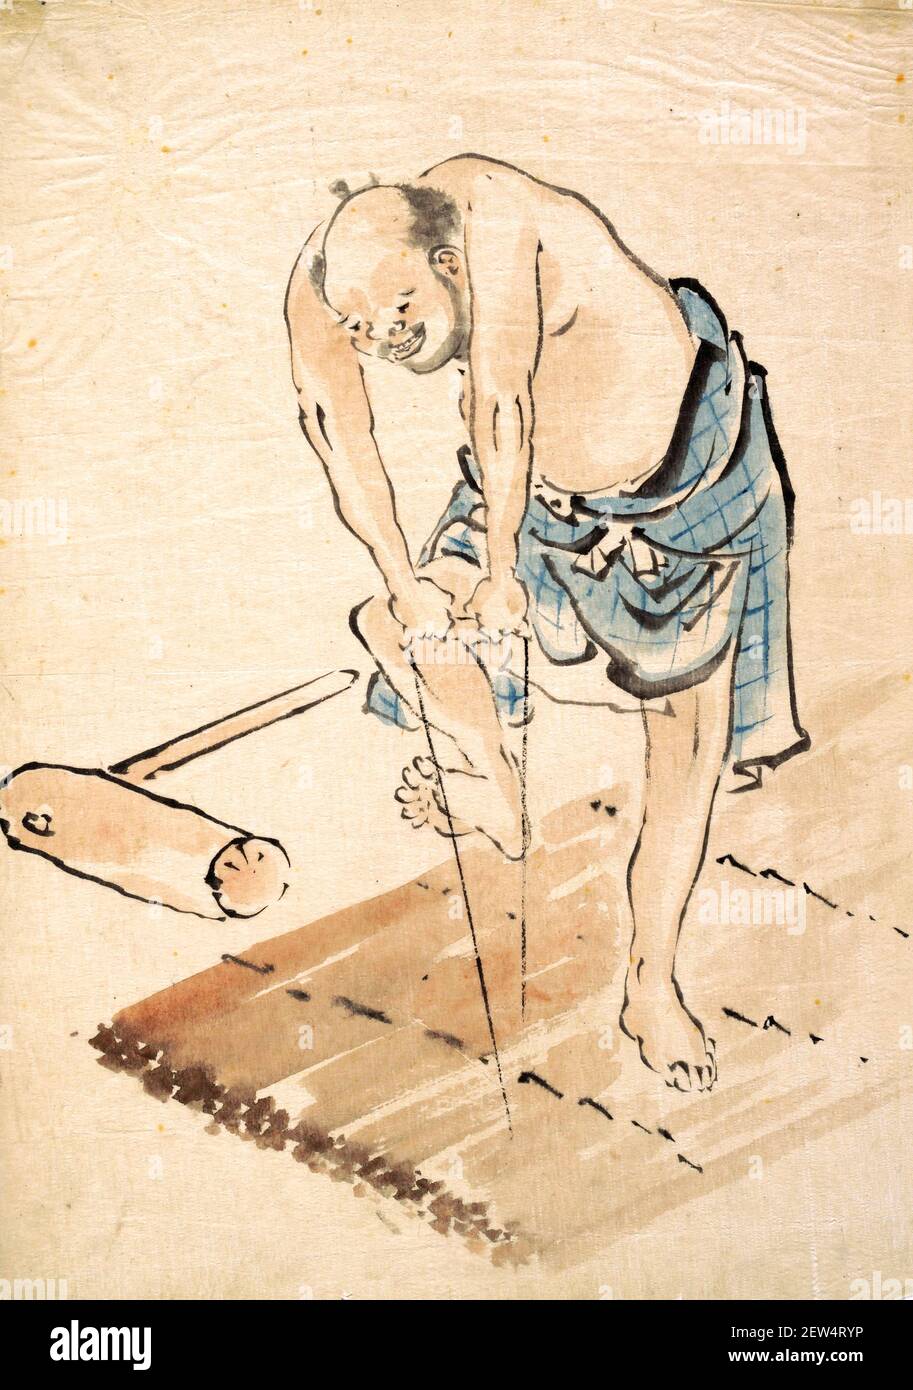 Hokusai. Man on a Raft by the Japanese artist and printmaker, Katsushika Hokusai (葛飾 北斎, c. 1760-1849), woodblock print; ink and color on paper Stock Photo